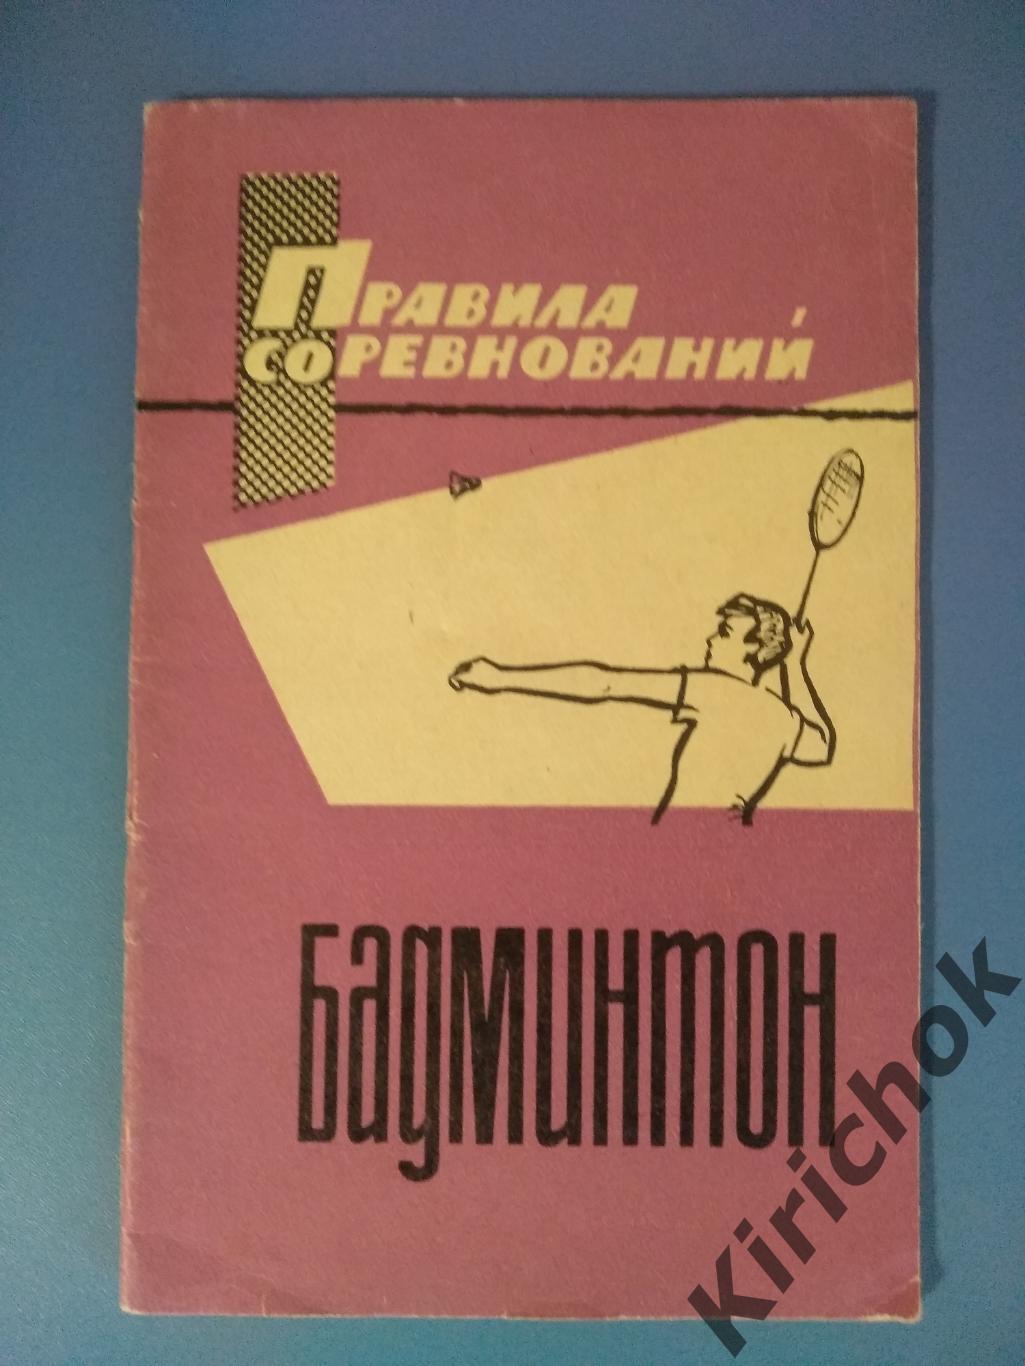 Издание: СССР. Бадминтон. Москва 1967